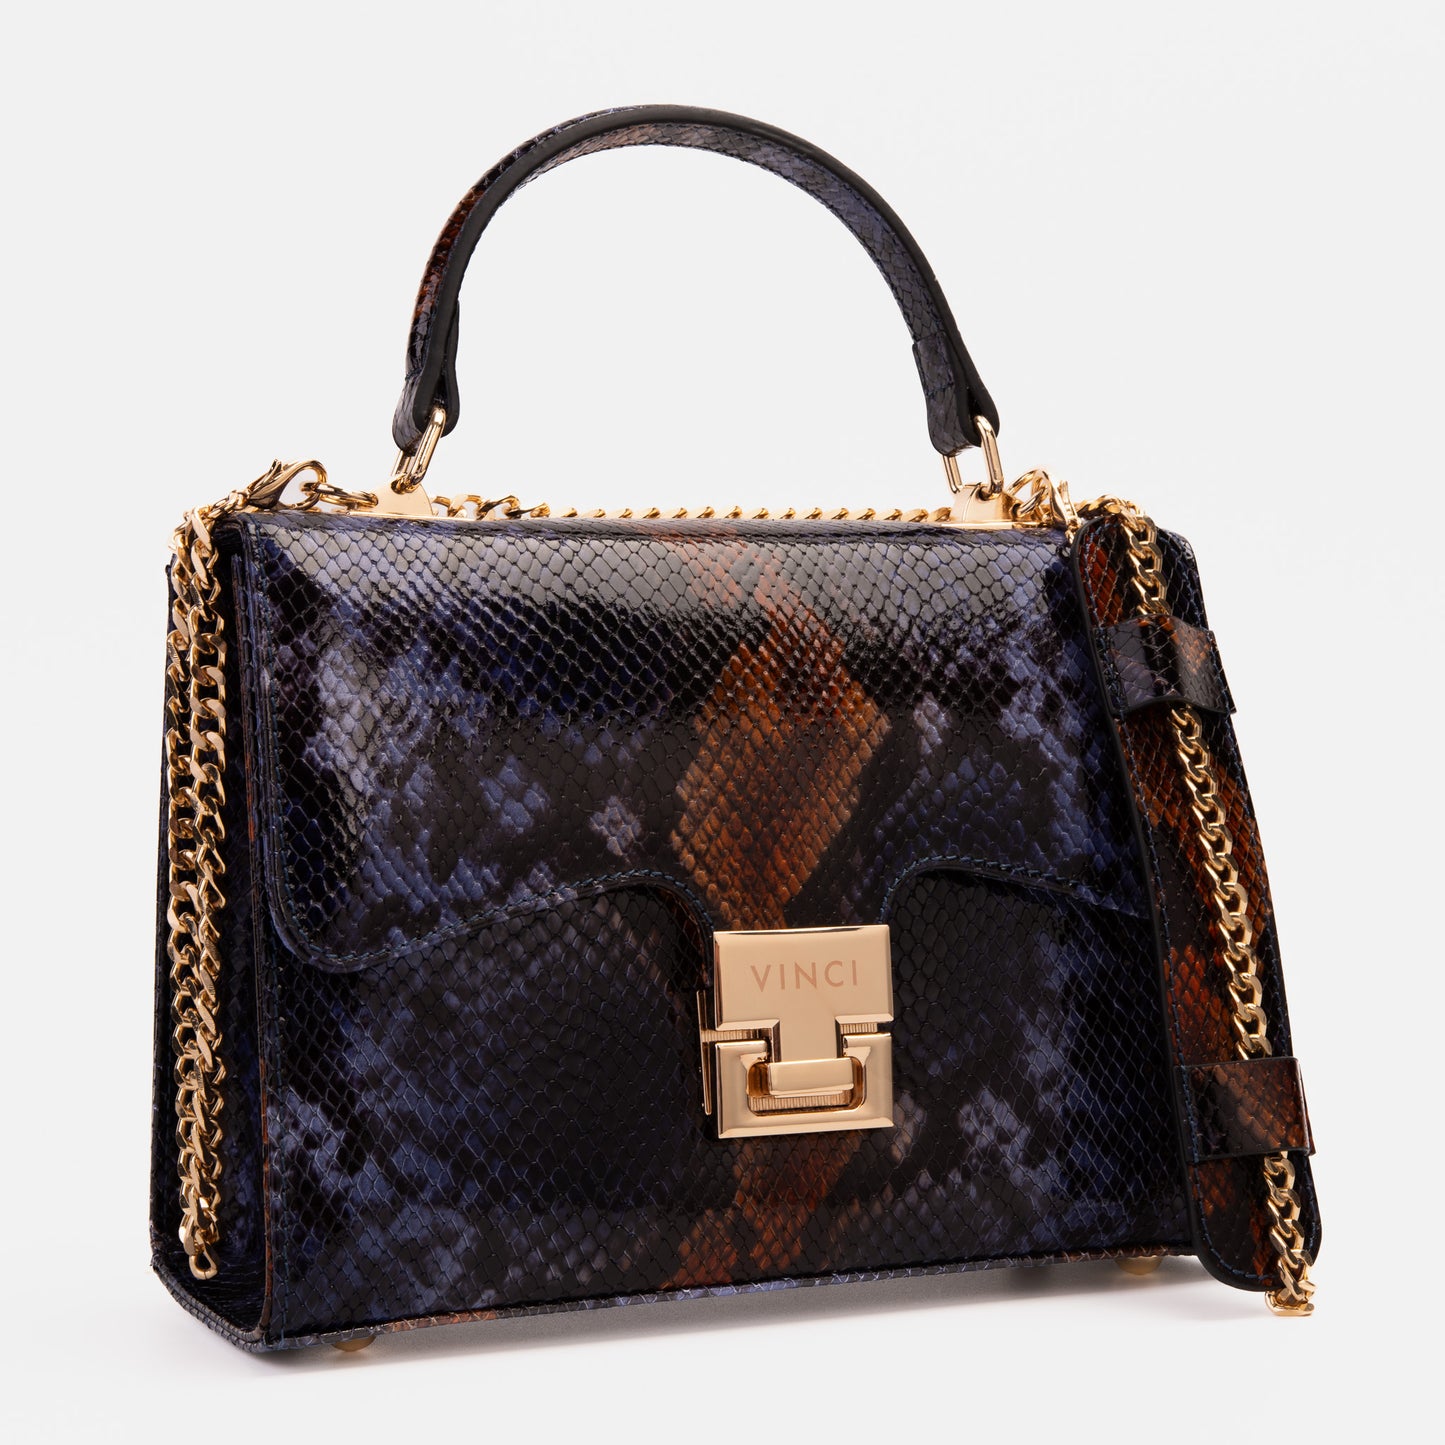 The Venezia Navy Blue Leather Snk Handbag